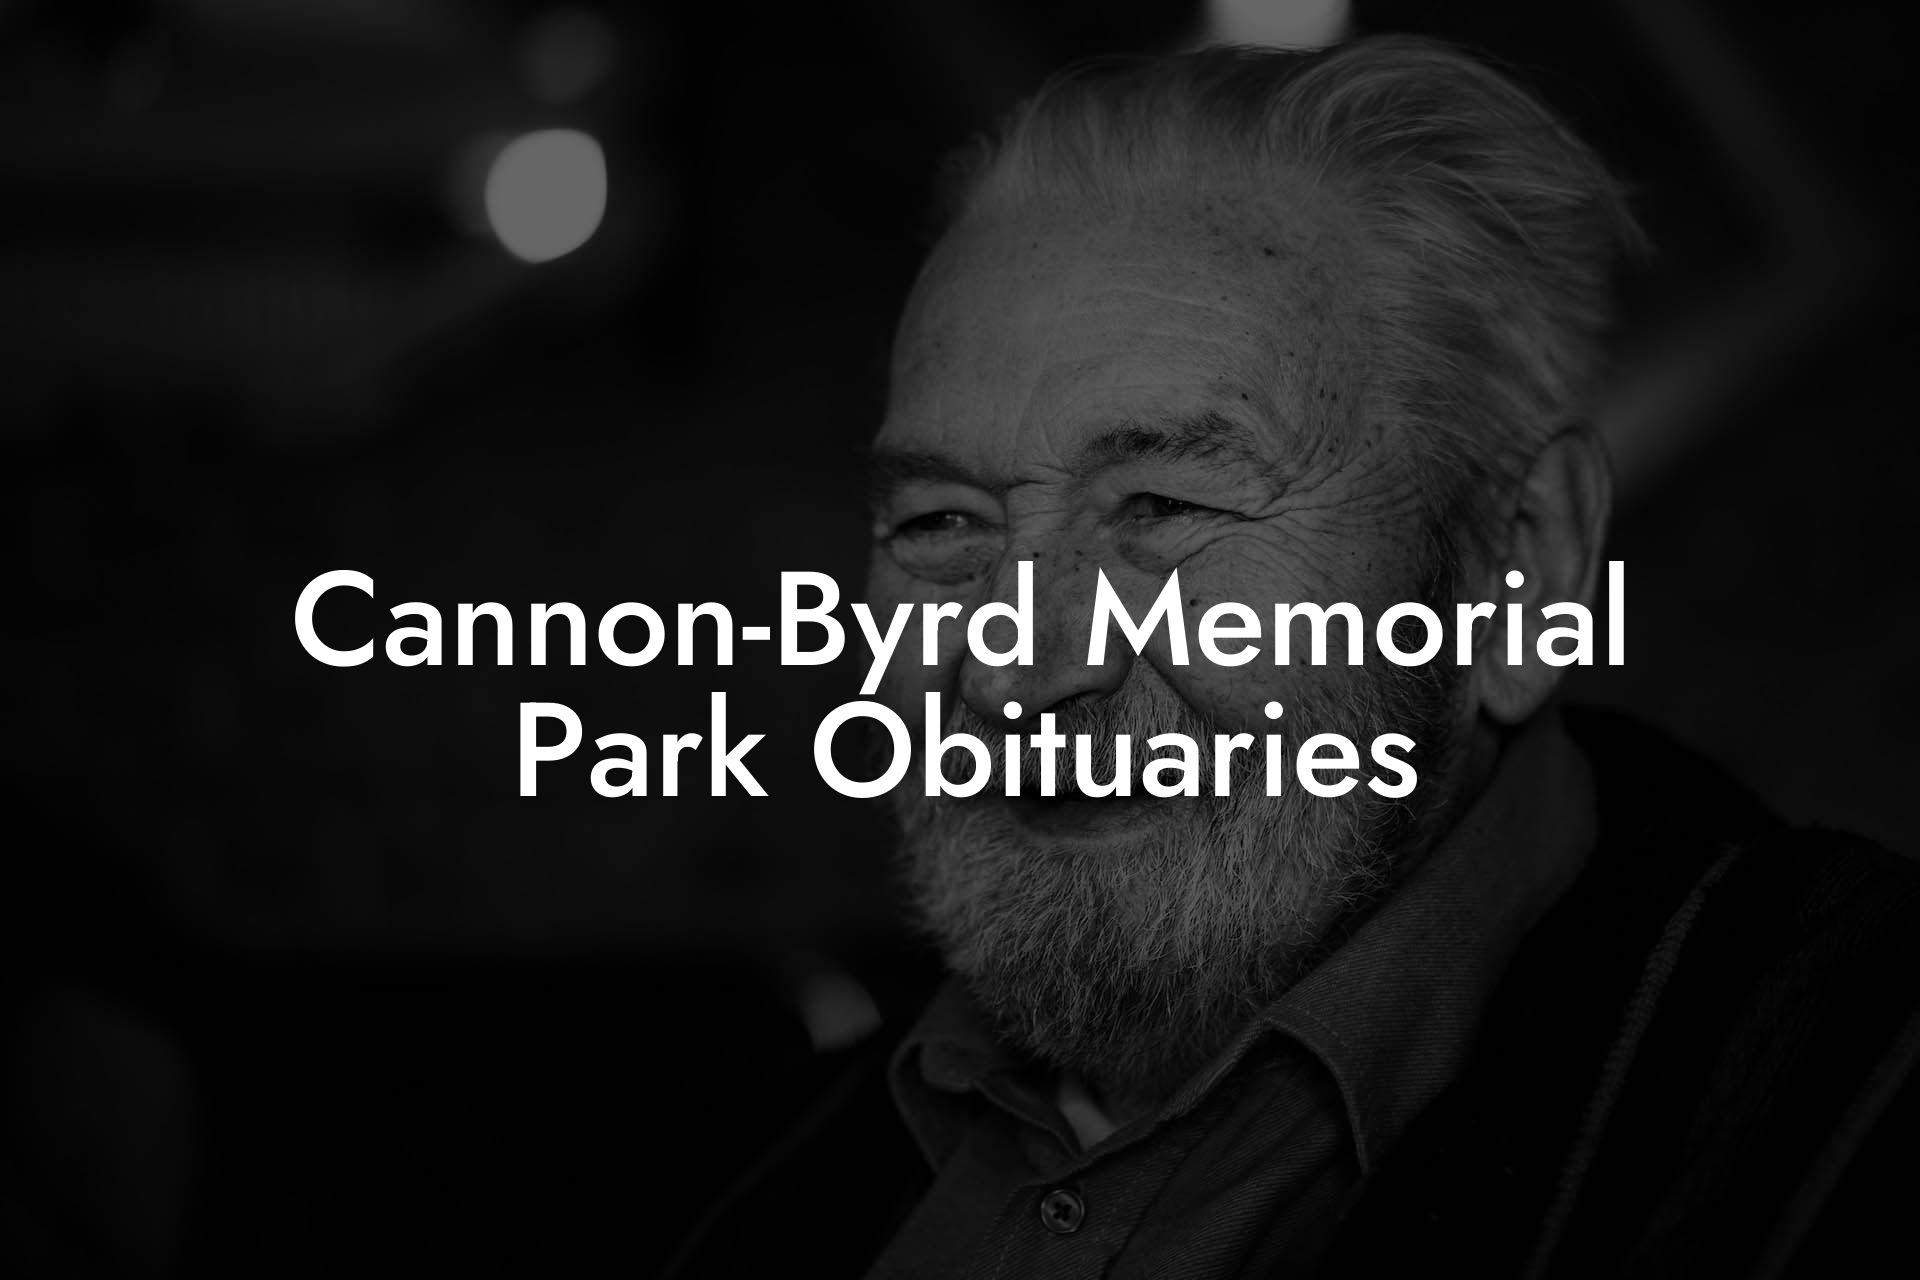 Cannon-Byrd Memorial Park Obituaries